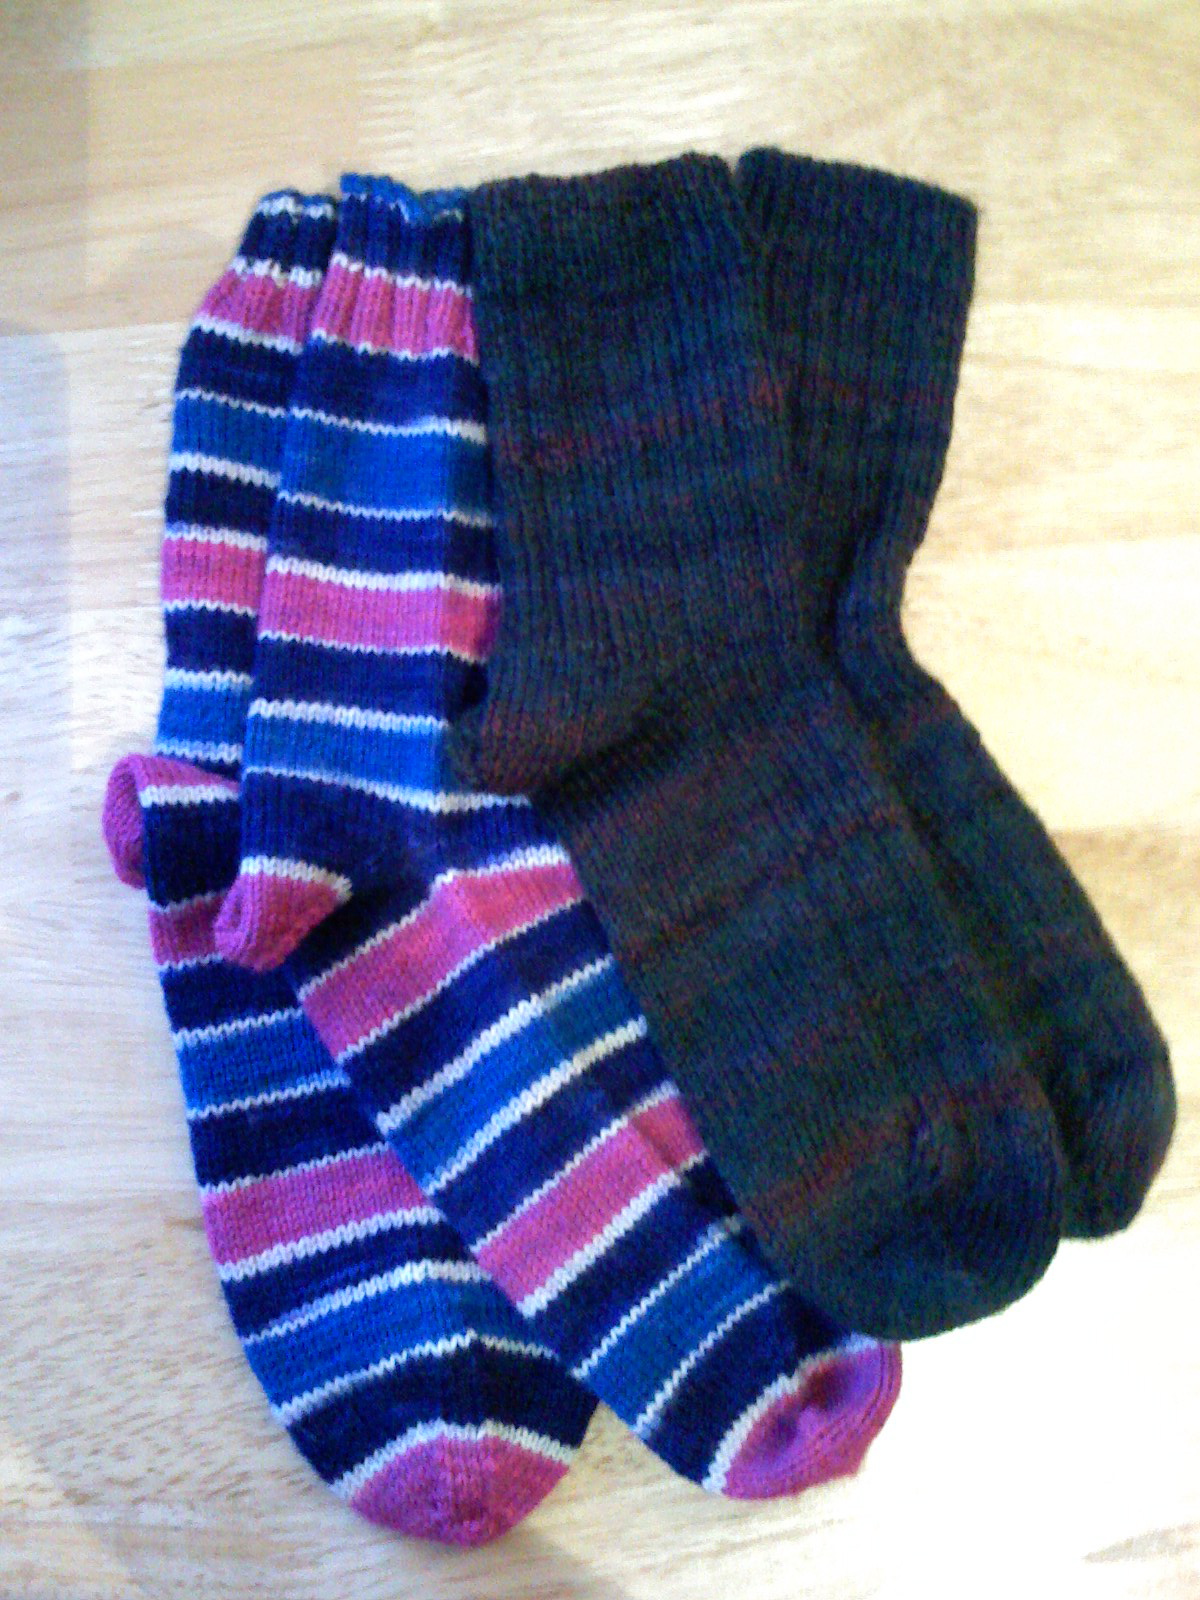 Finished Socks